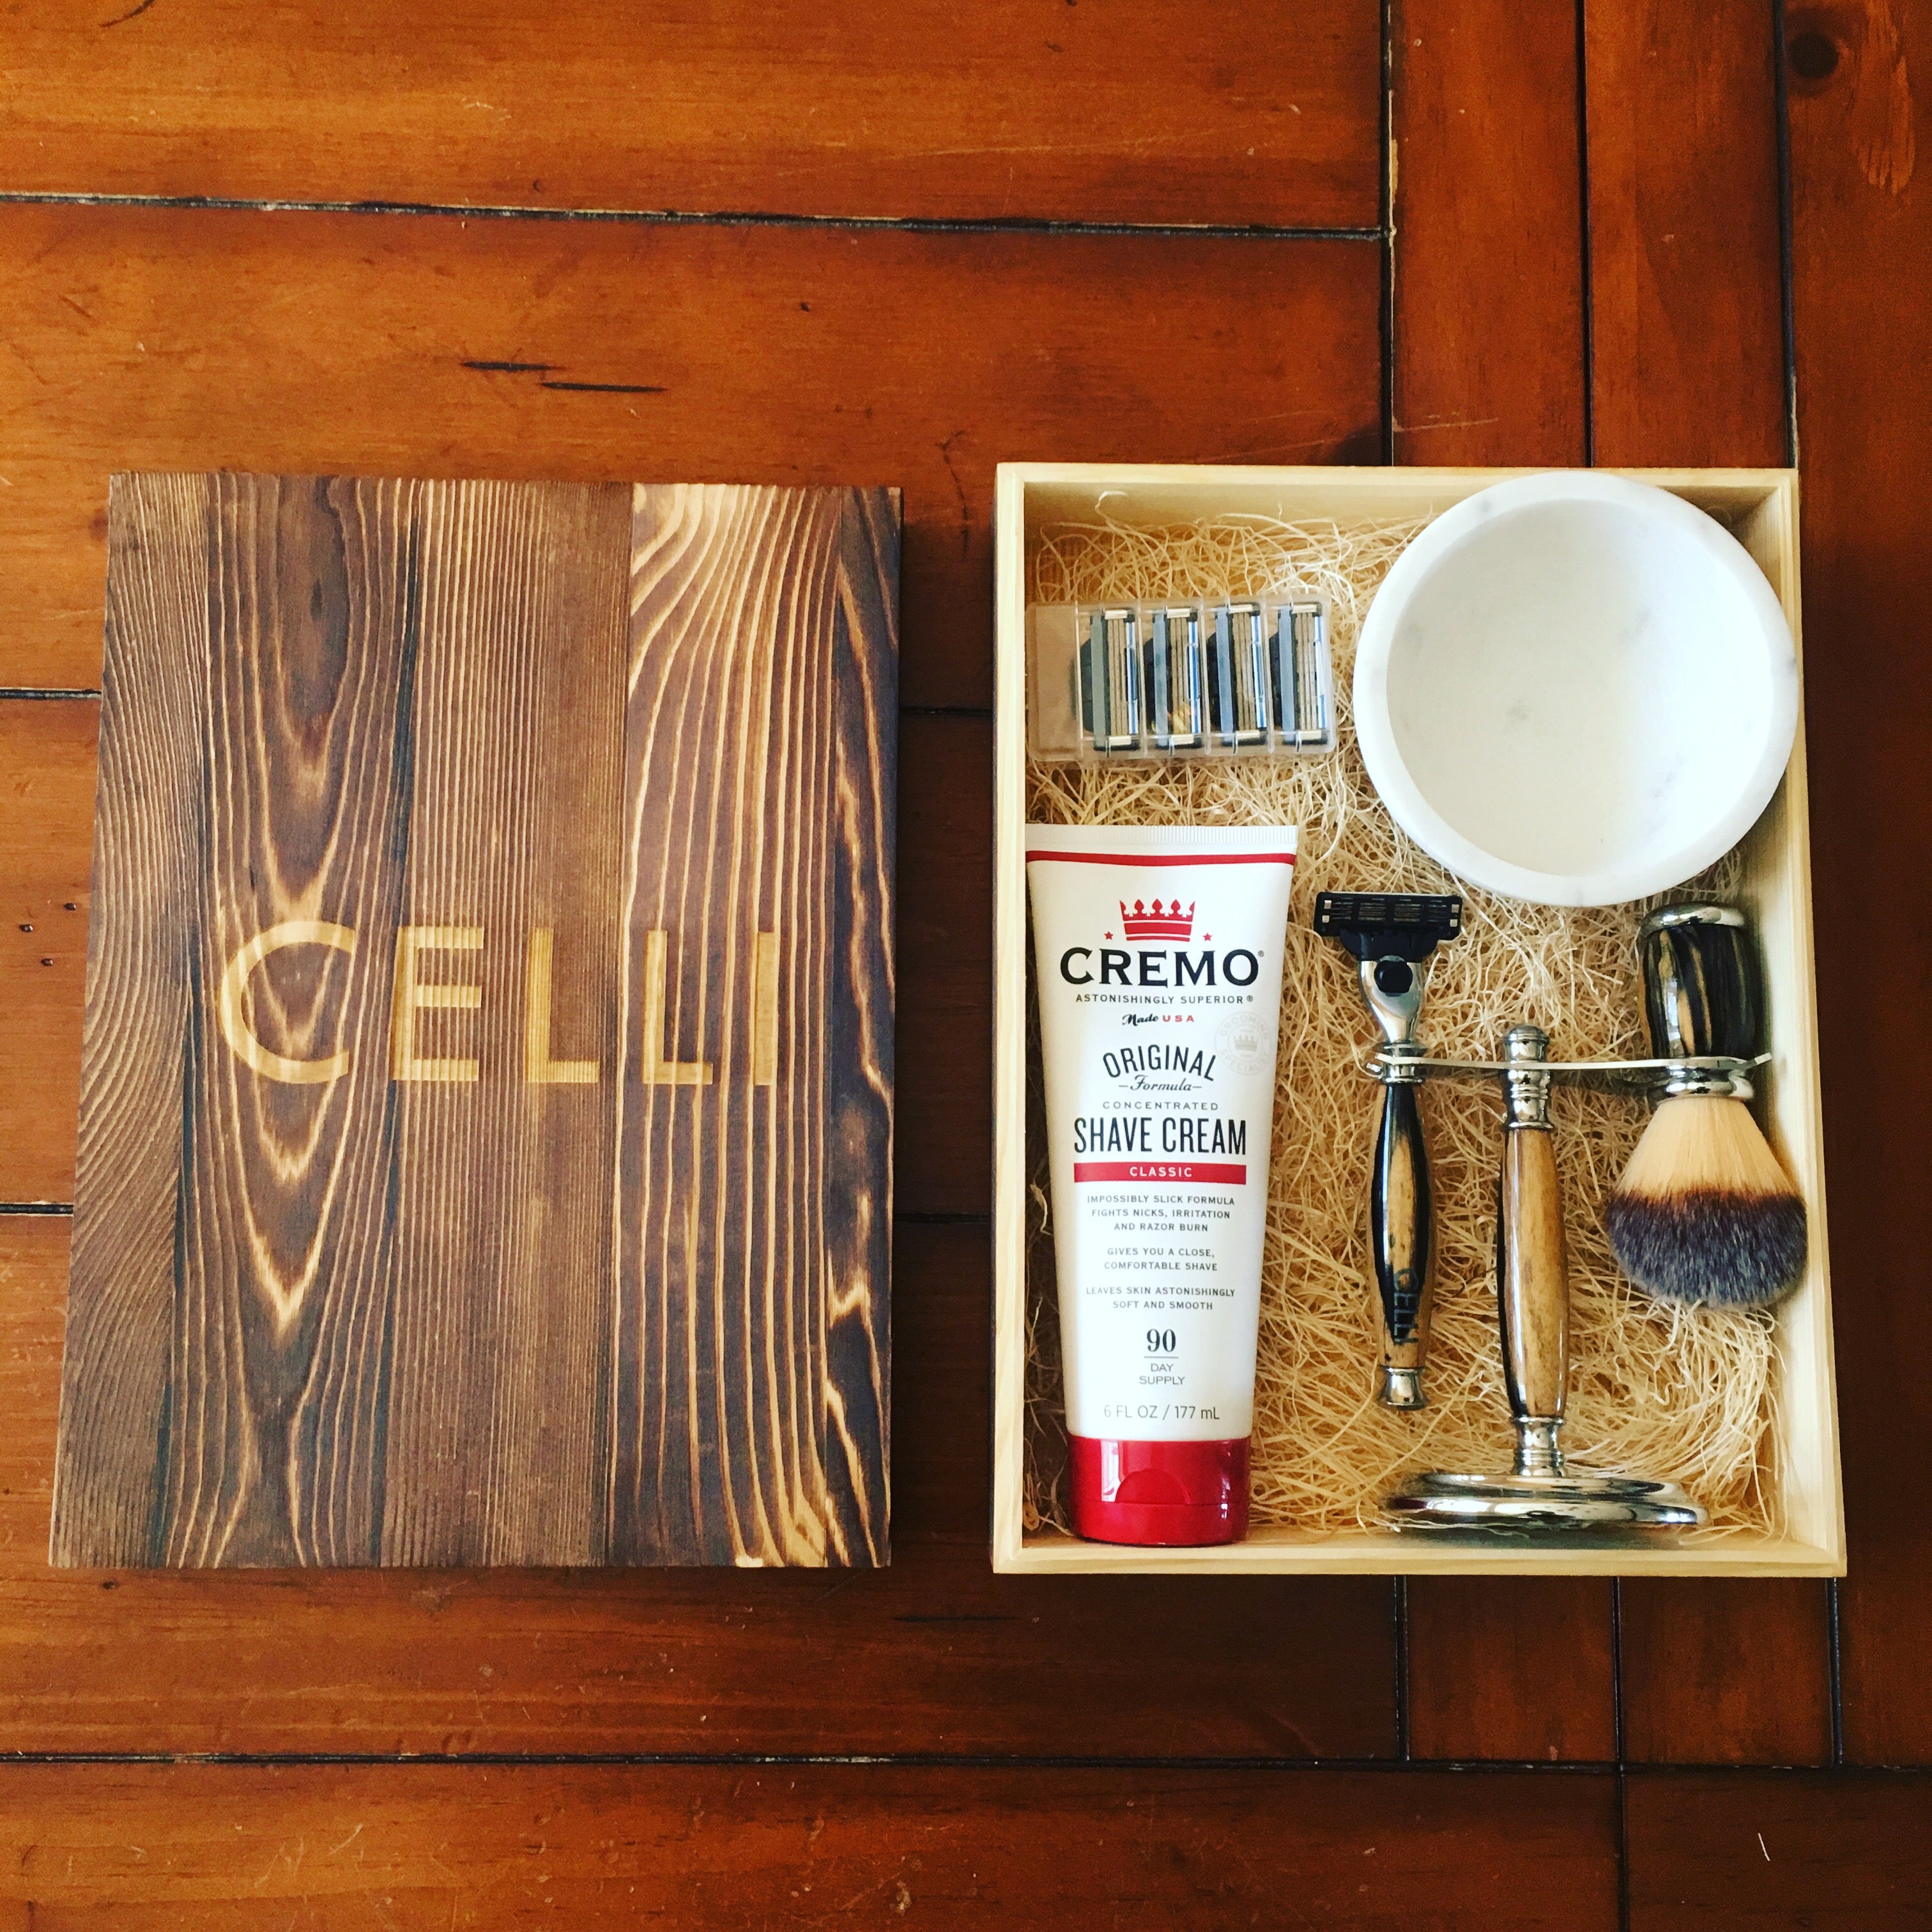 Celli Shave Luxury Shaving Gift Set